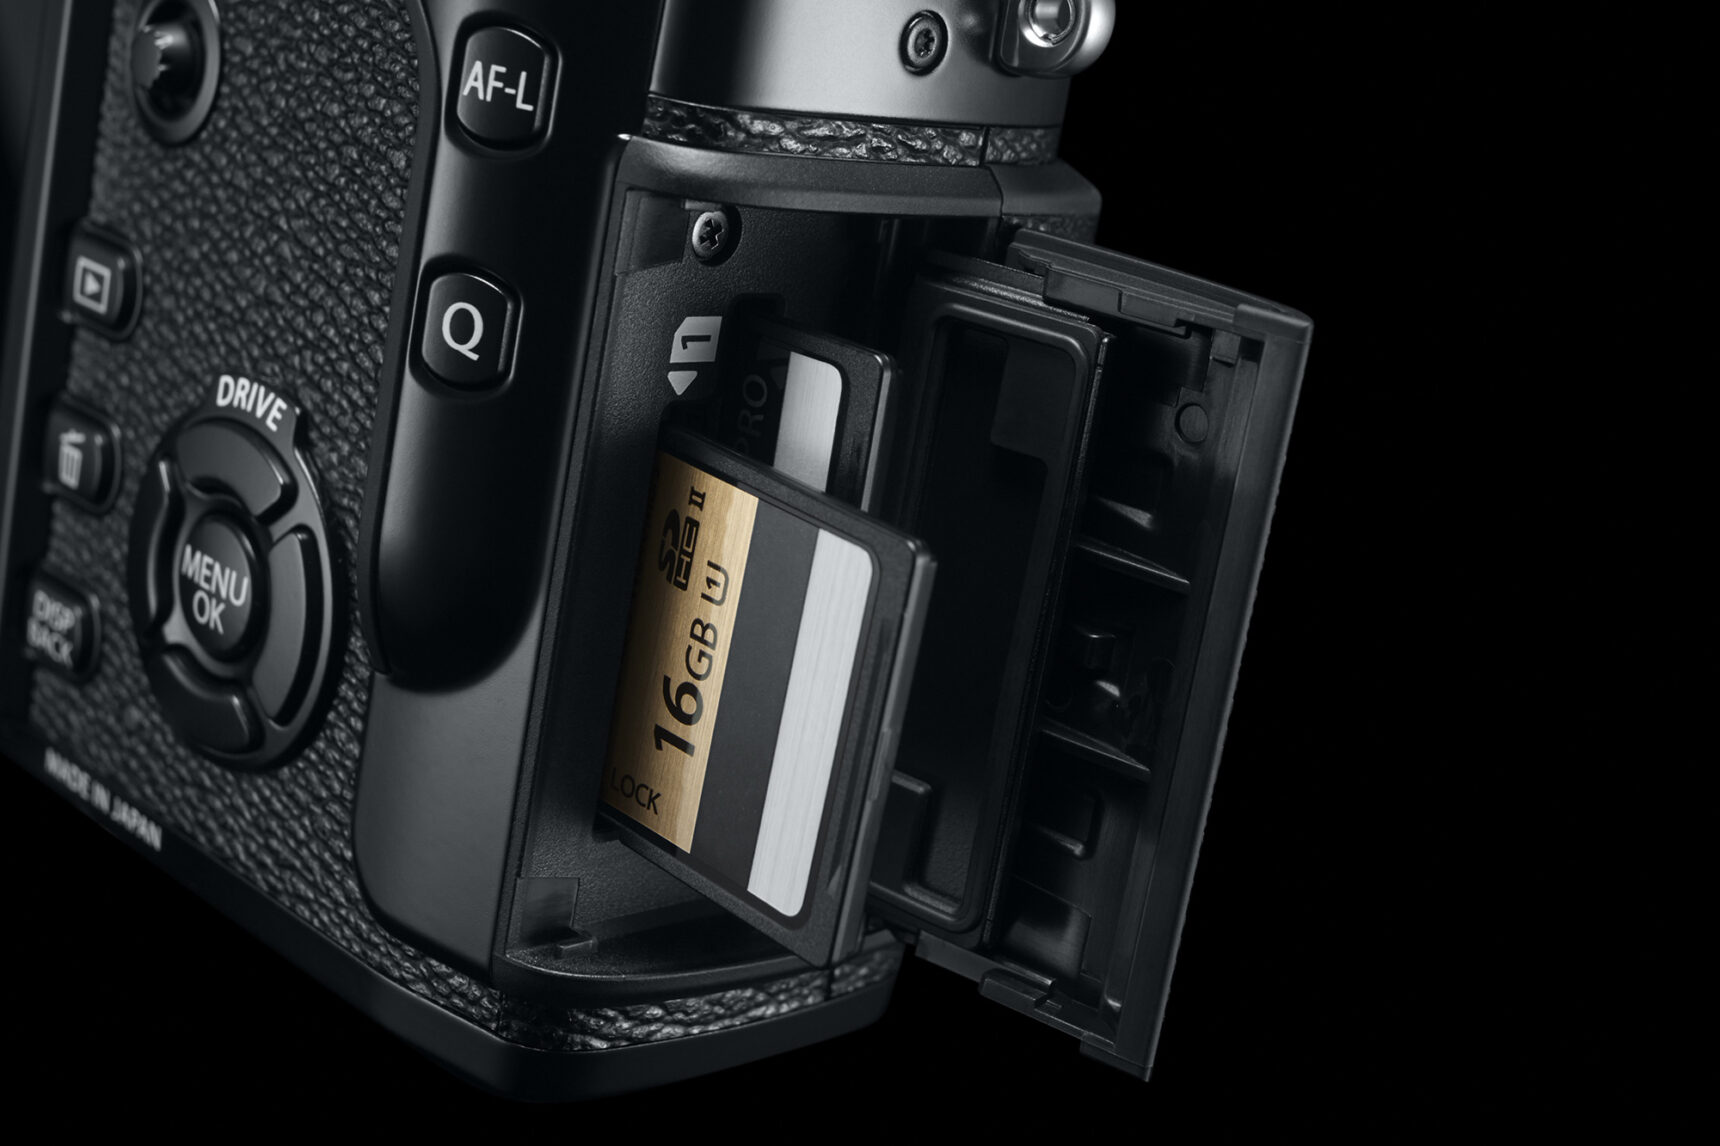 Fuji X-Pro2 Street Photography Review - Dual Card Slots